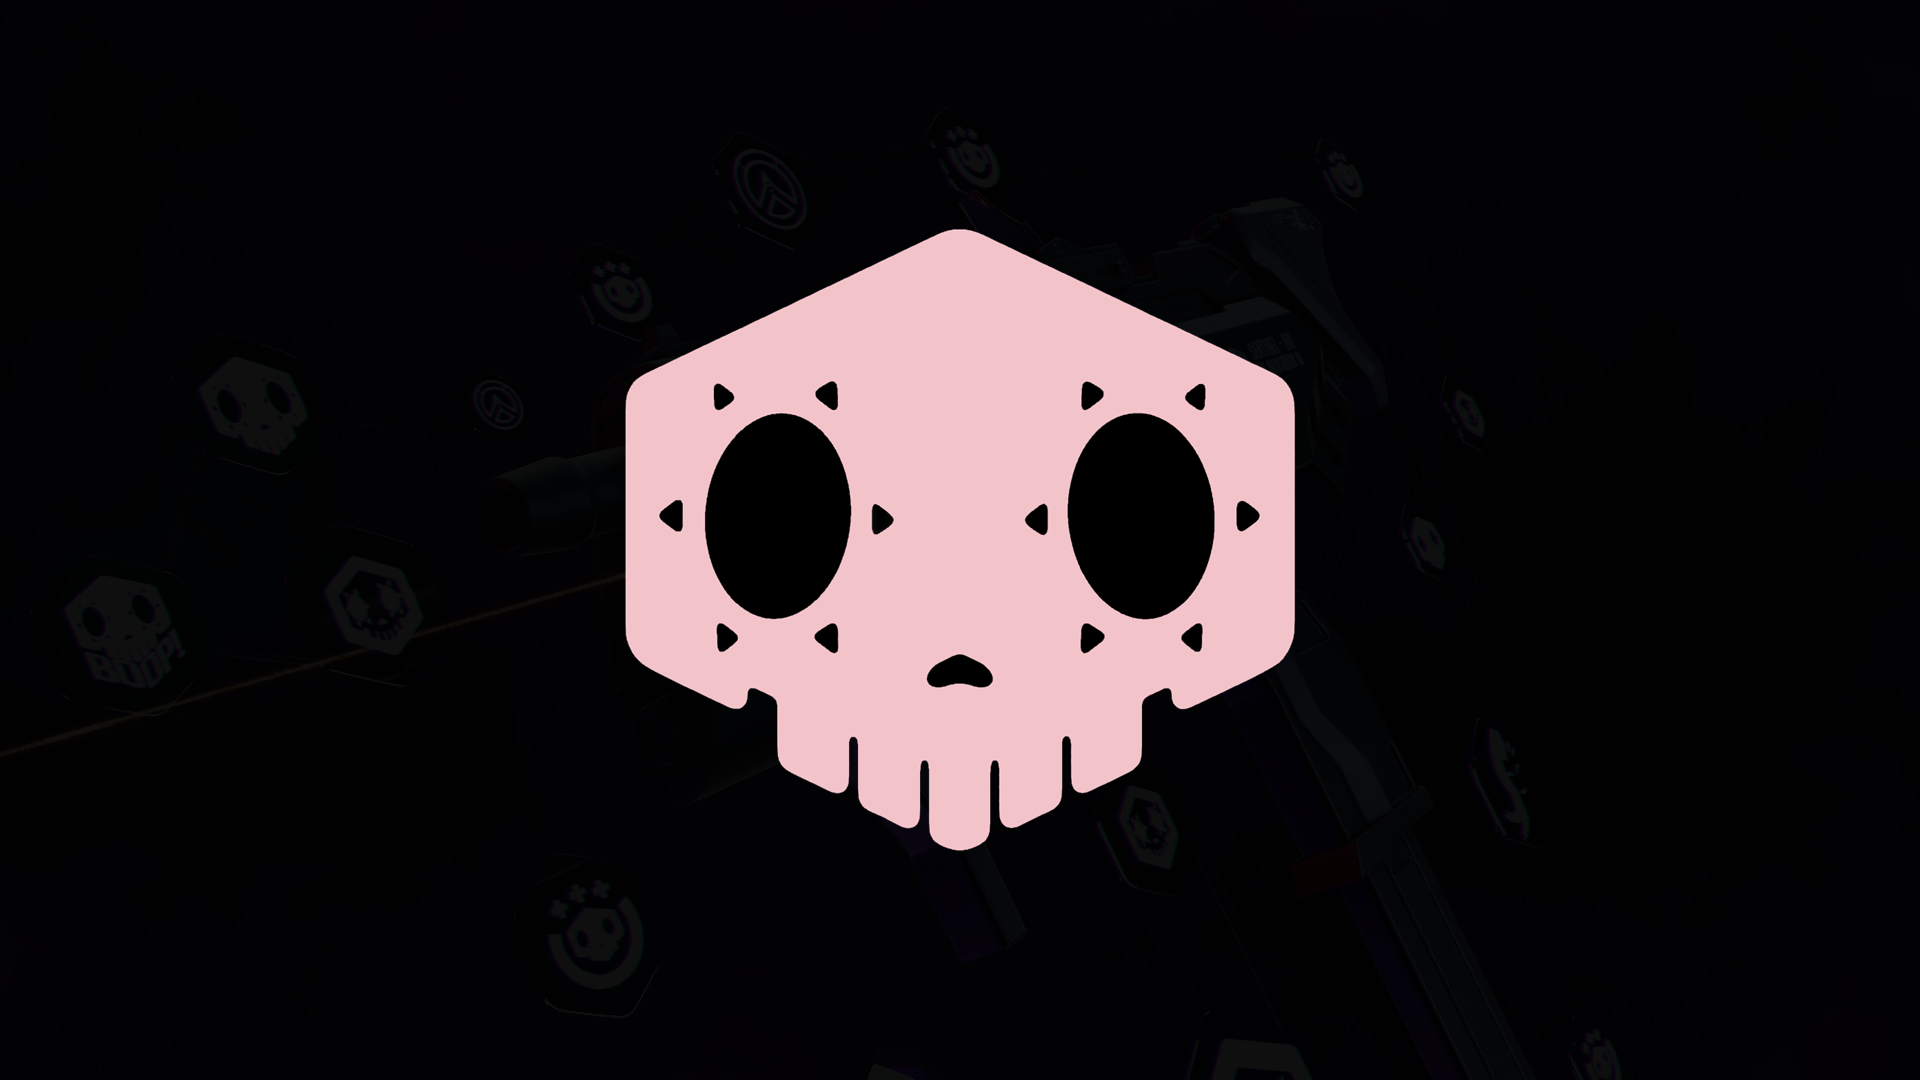 Sombra Overwatch Black Background Hackers Mask 1920x1080